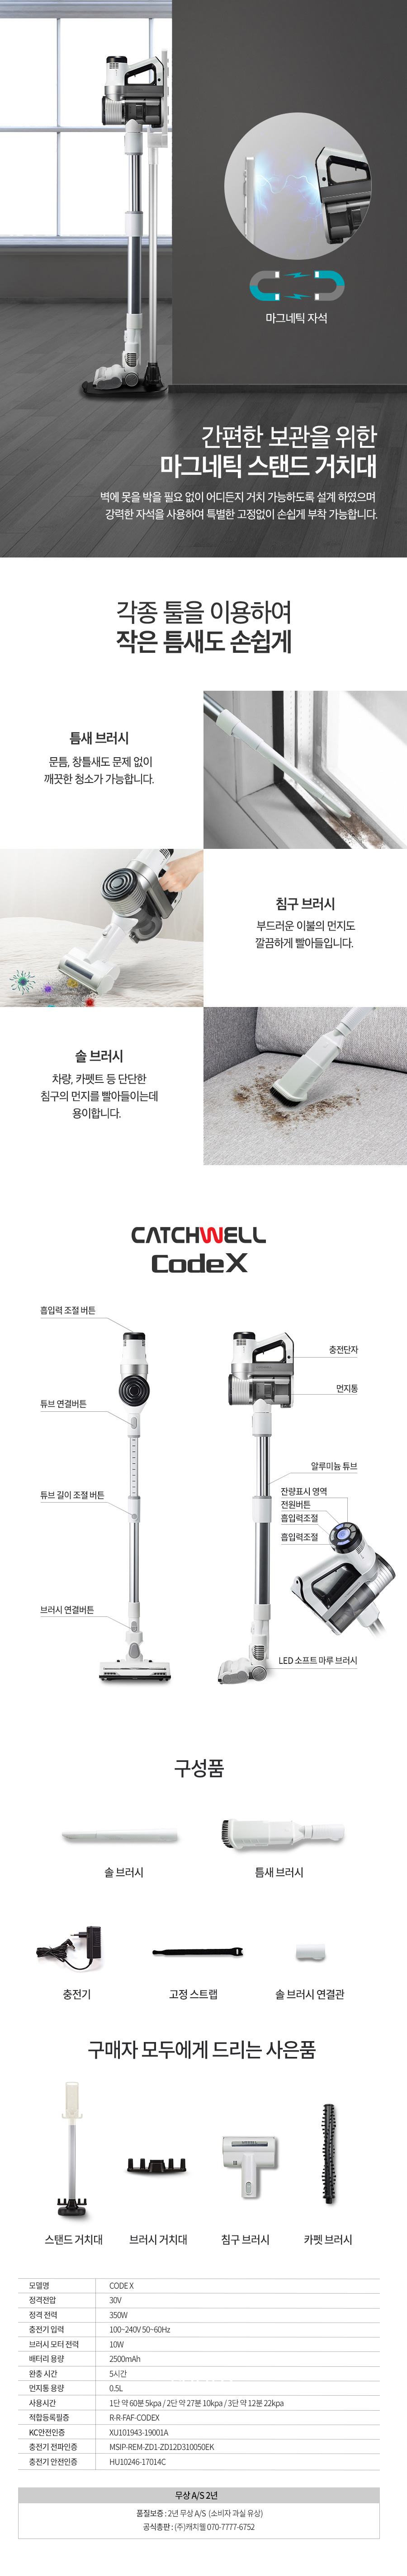 catchwell codex zero_07